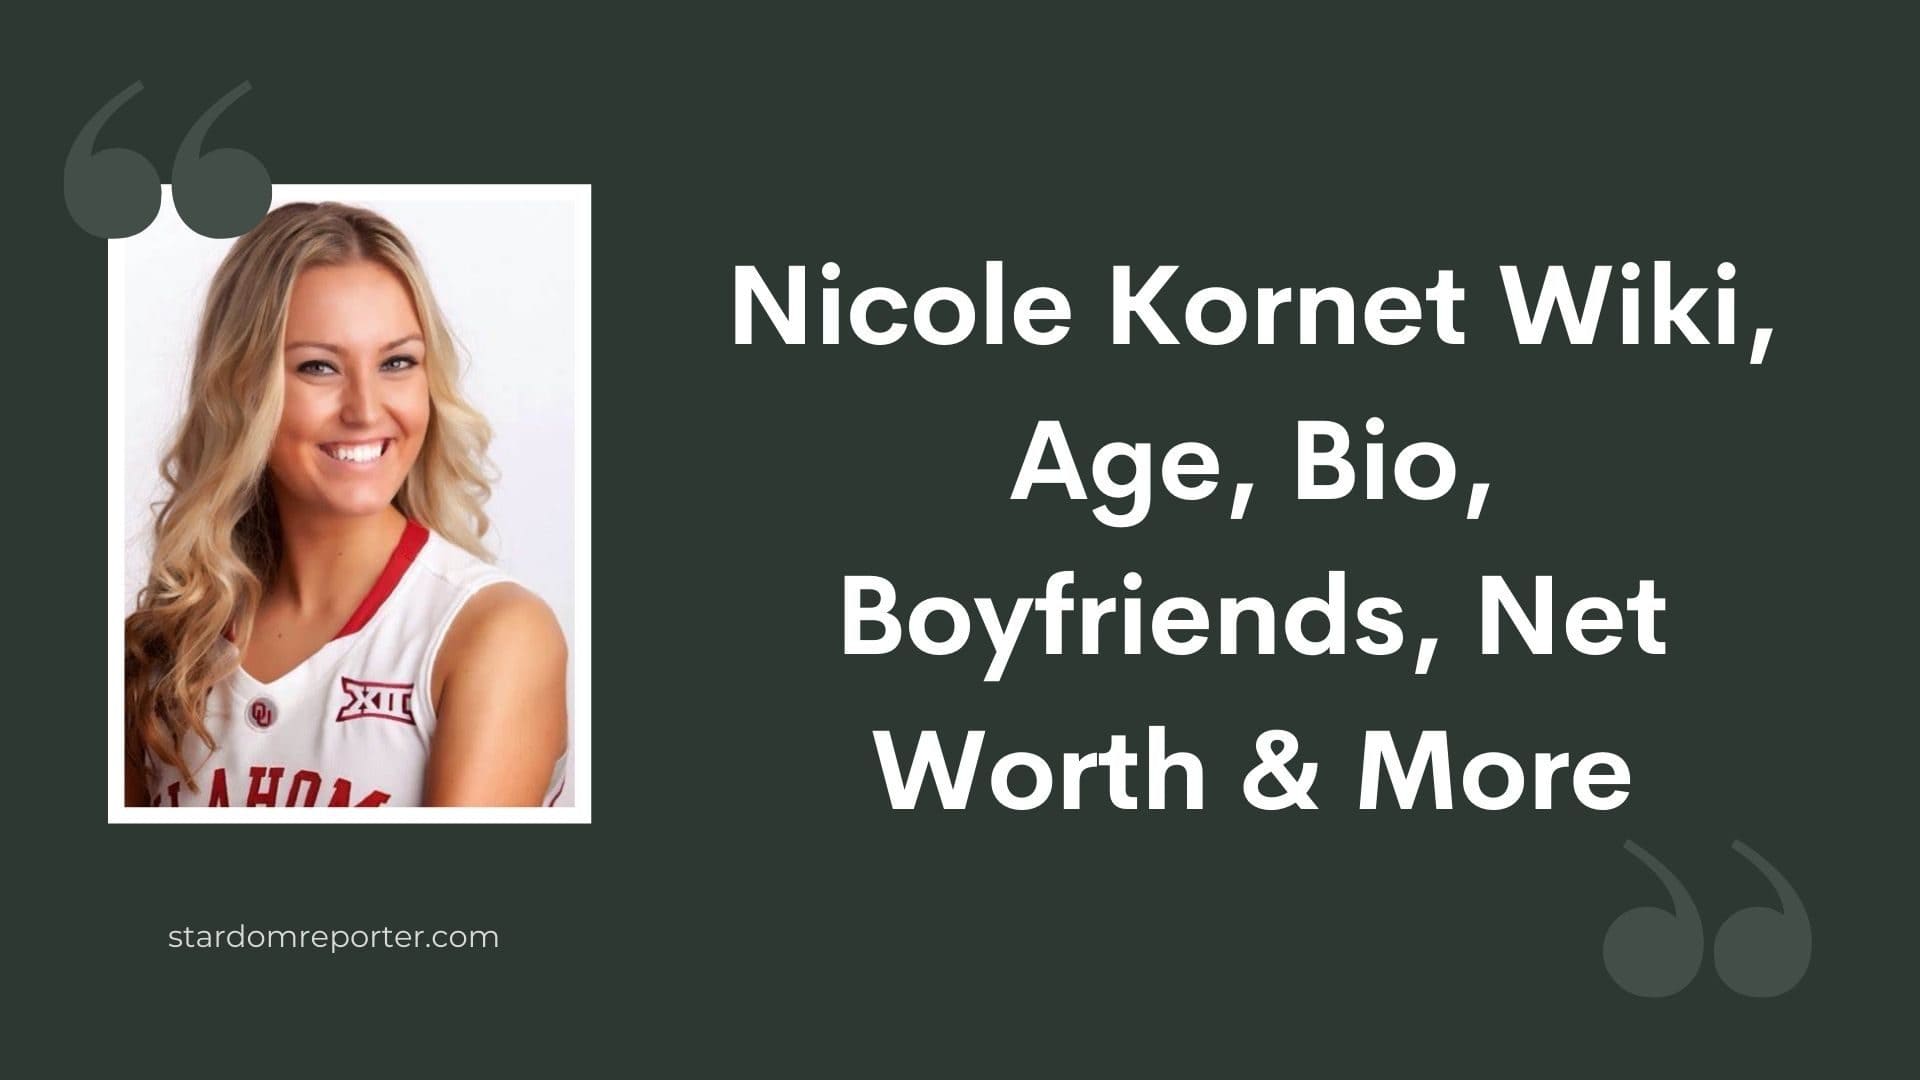 Nicole Kornet Wiki, Age, Bio, Boyfriends, Net Worth & More - 31